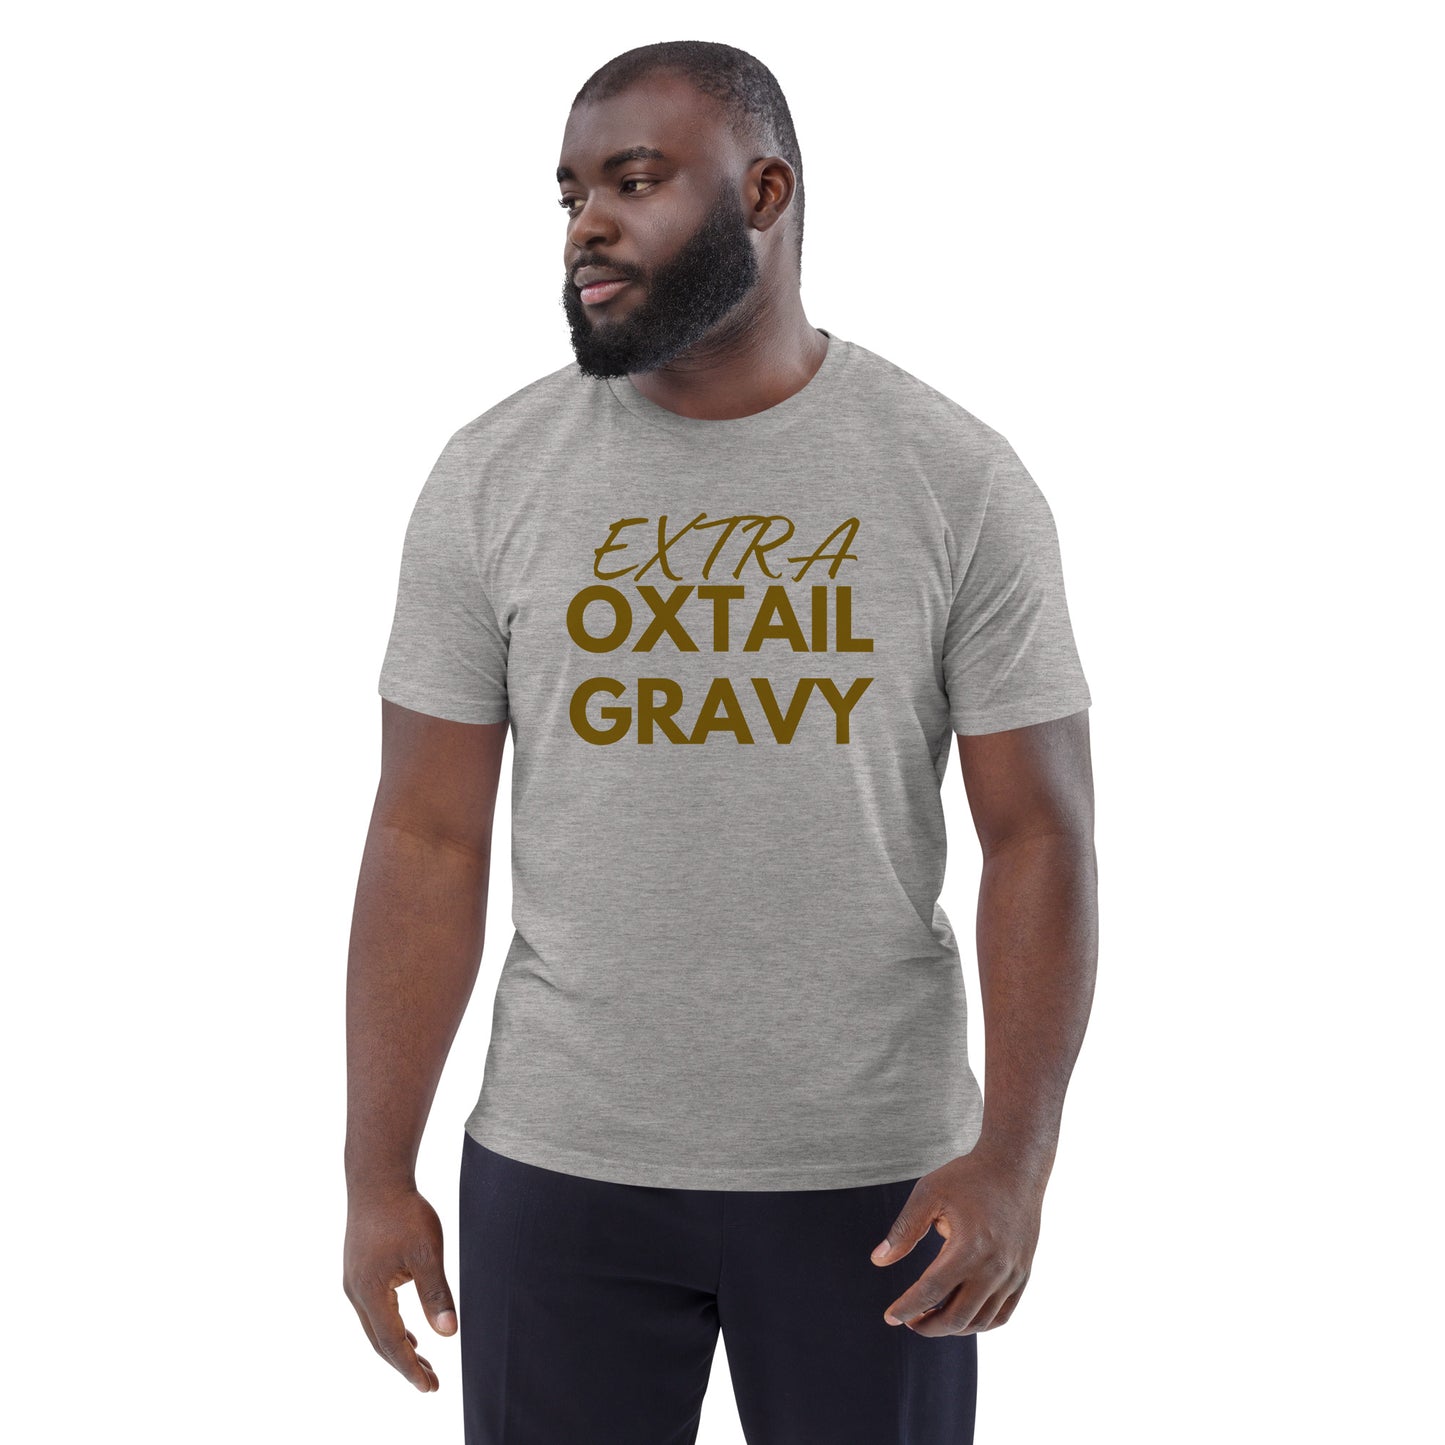 "Extra Oxtail Gravy" Men's T-Shirt